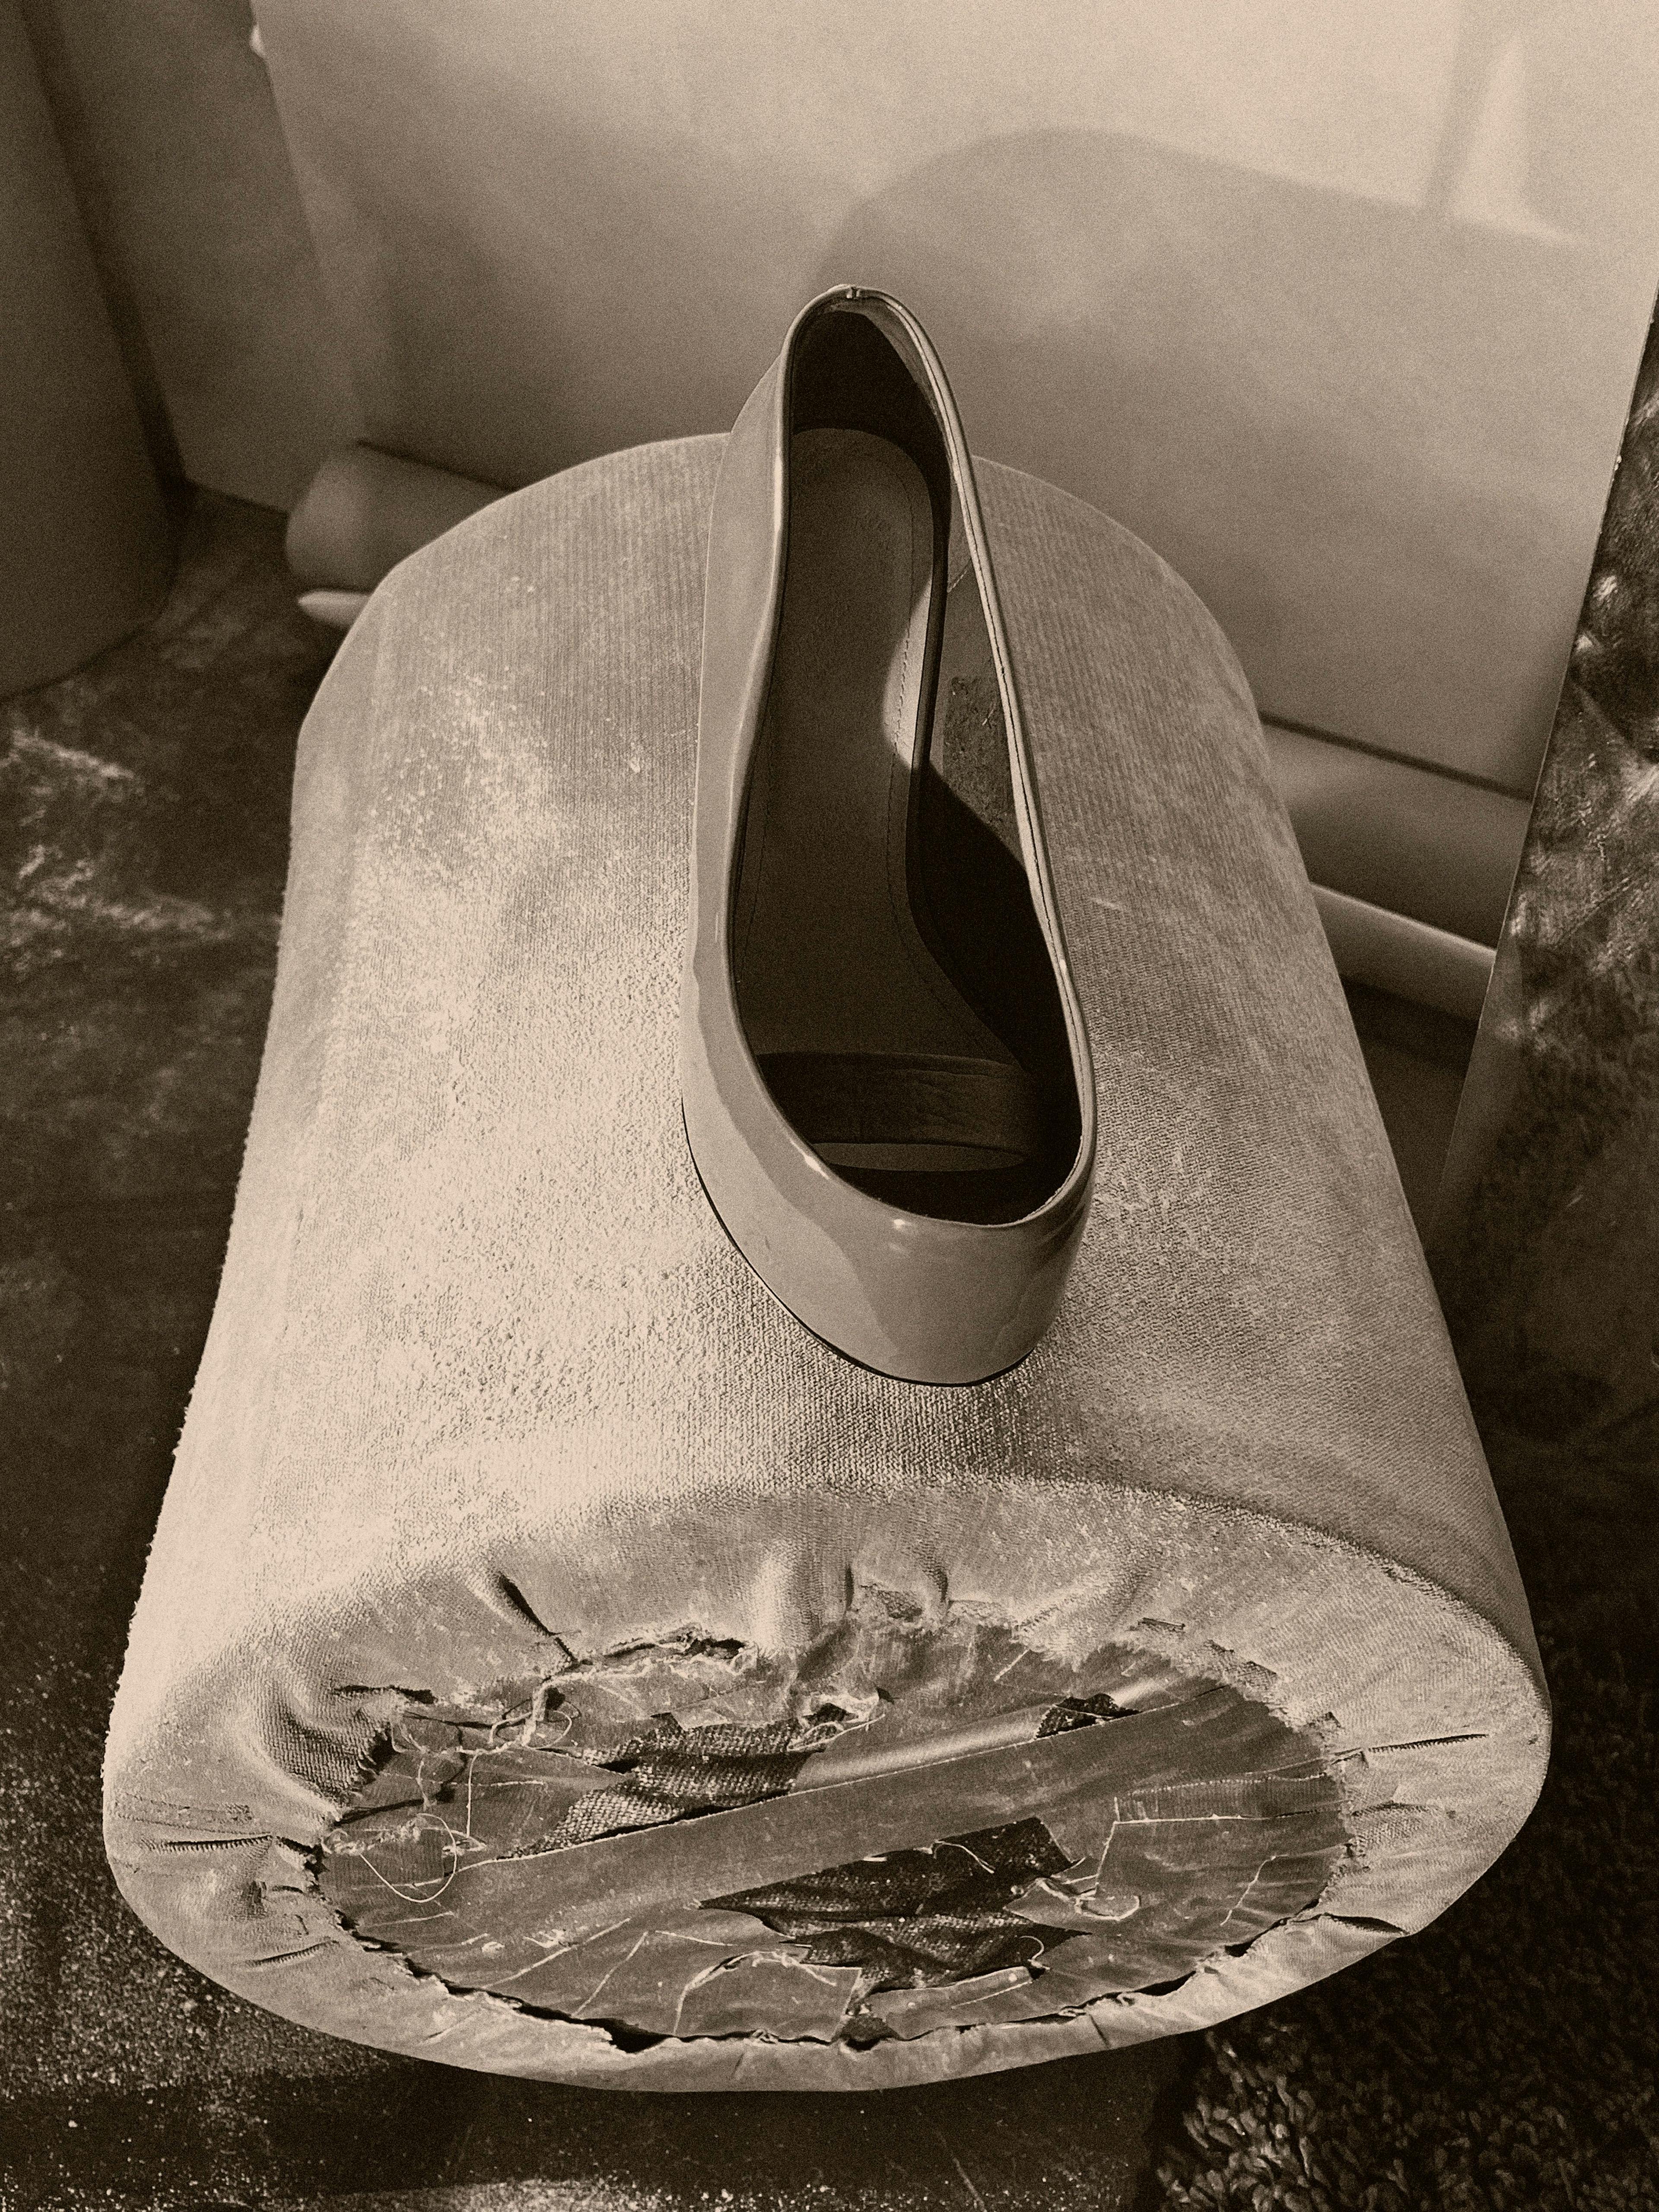 Vintage shoe by Martin Margiela from Passage Contemporain